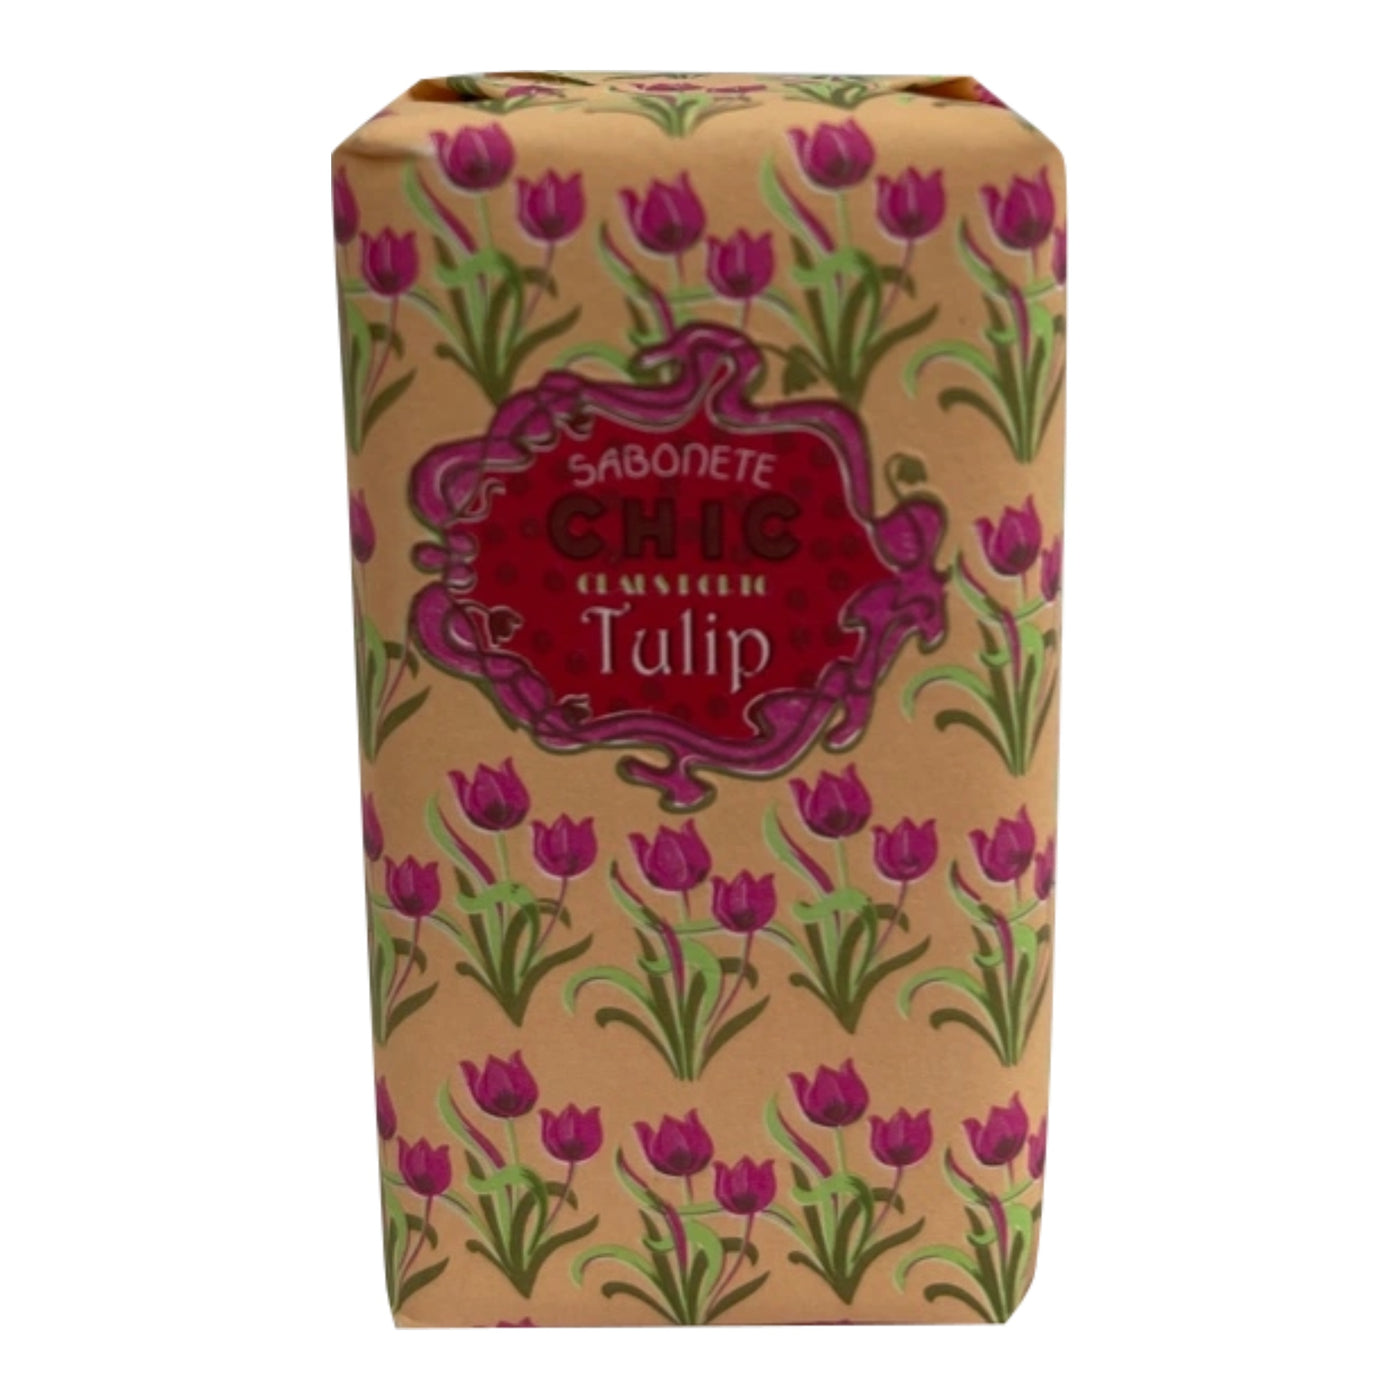 Wholesale Claus Porto Sabonete Chic Tulip Mini Soap, 1.8 Ounce Lot Of 20